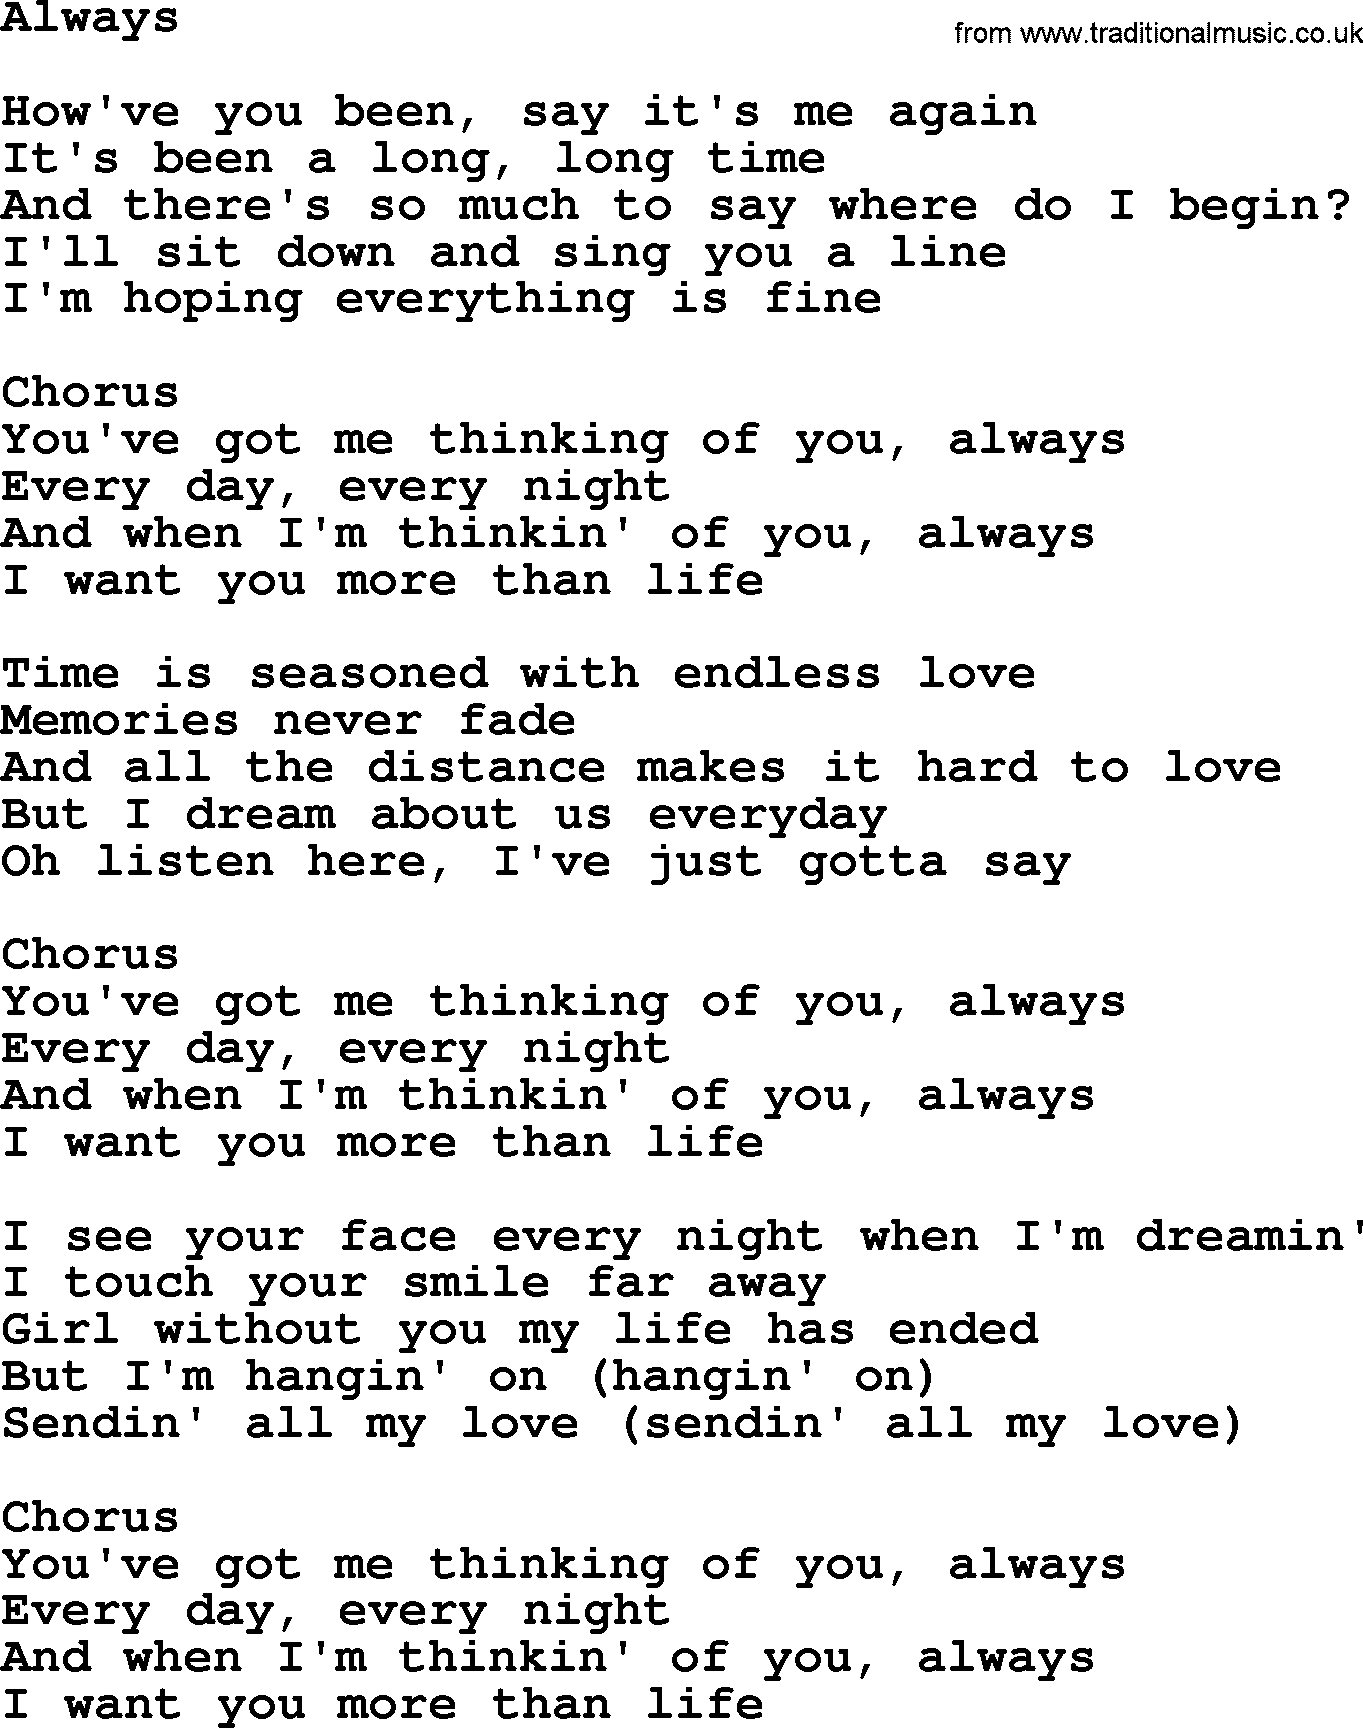 The Byrds song Always, lyrics